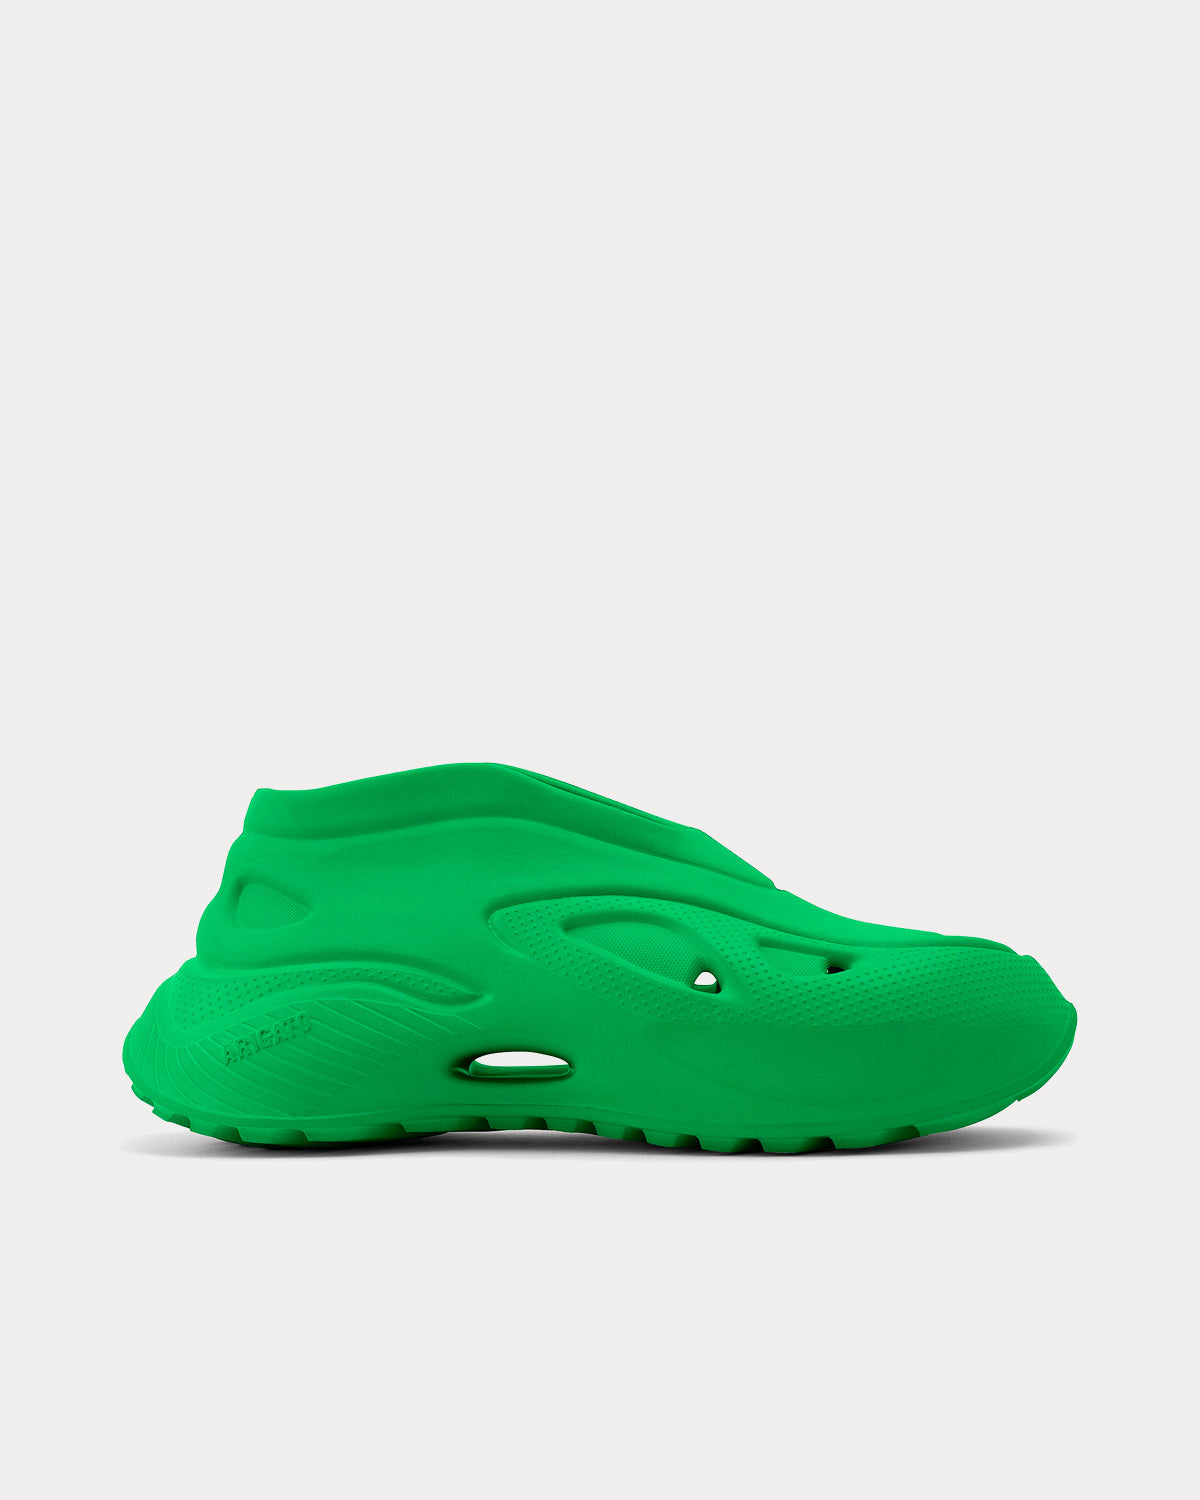 Axel Arigato - Pyro Bright Green Slip On Sneakers